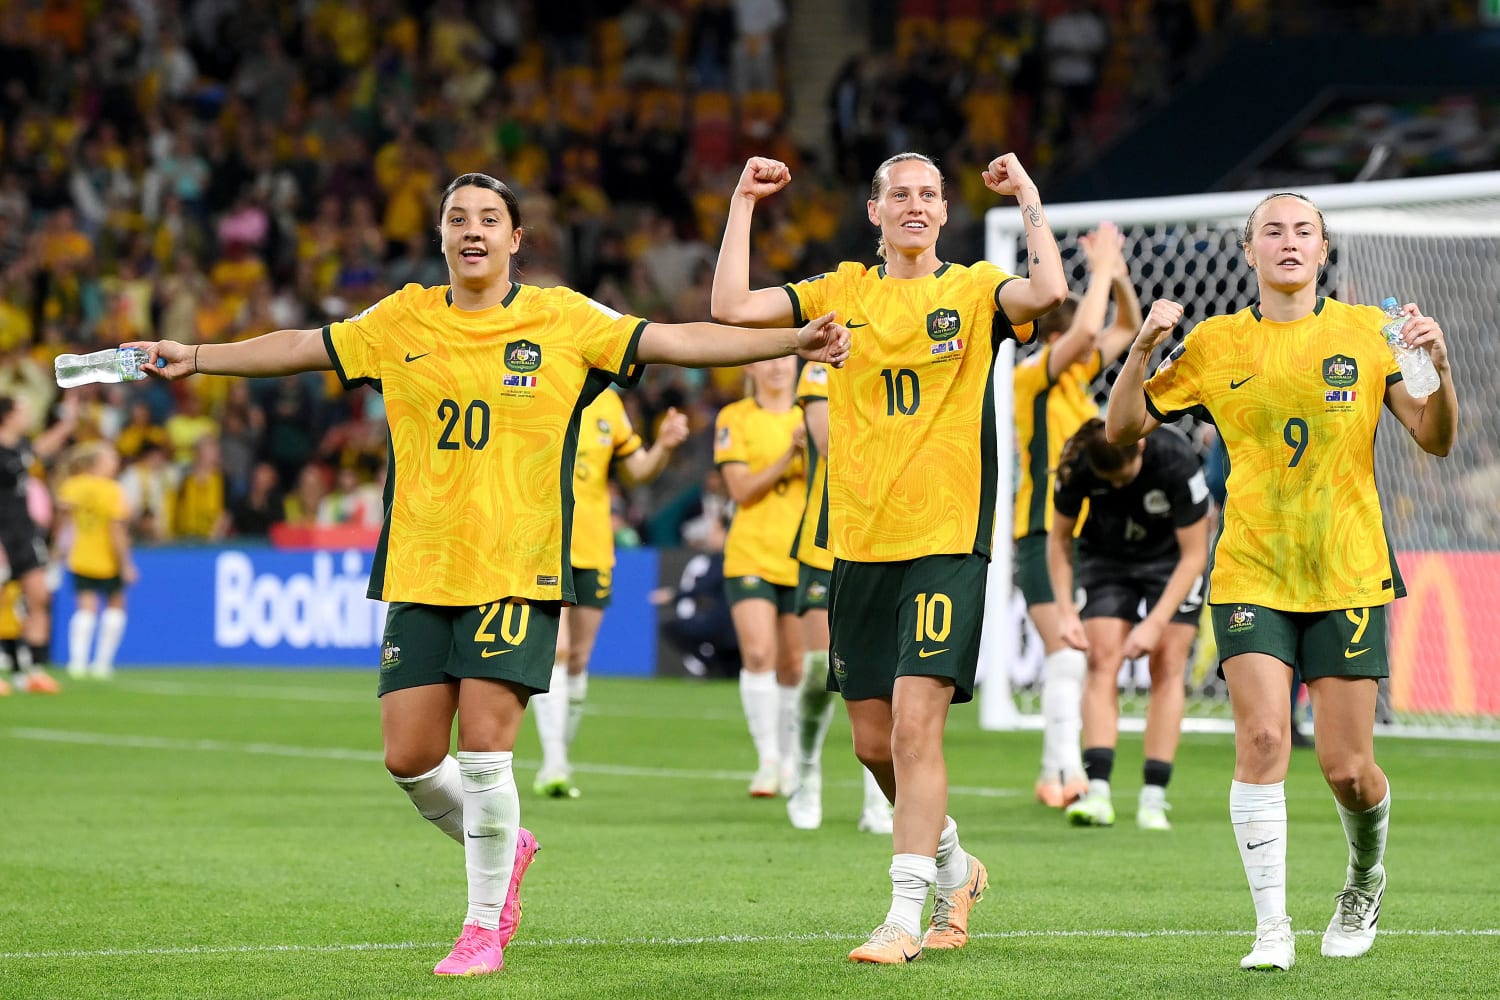 Matildas Mania Grips Australia As Womens Team Captures Hearts Of World Cup Host Newsfinale 